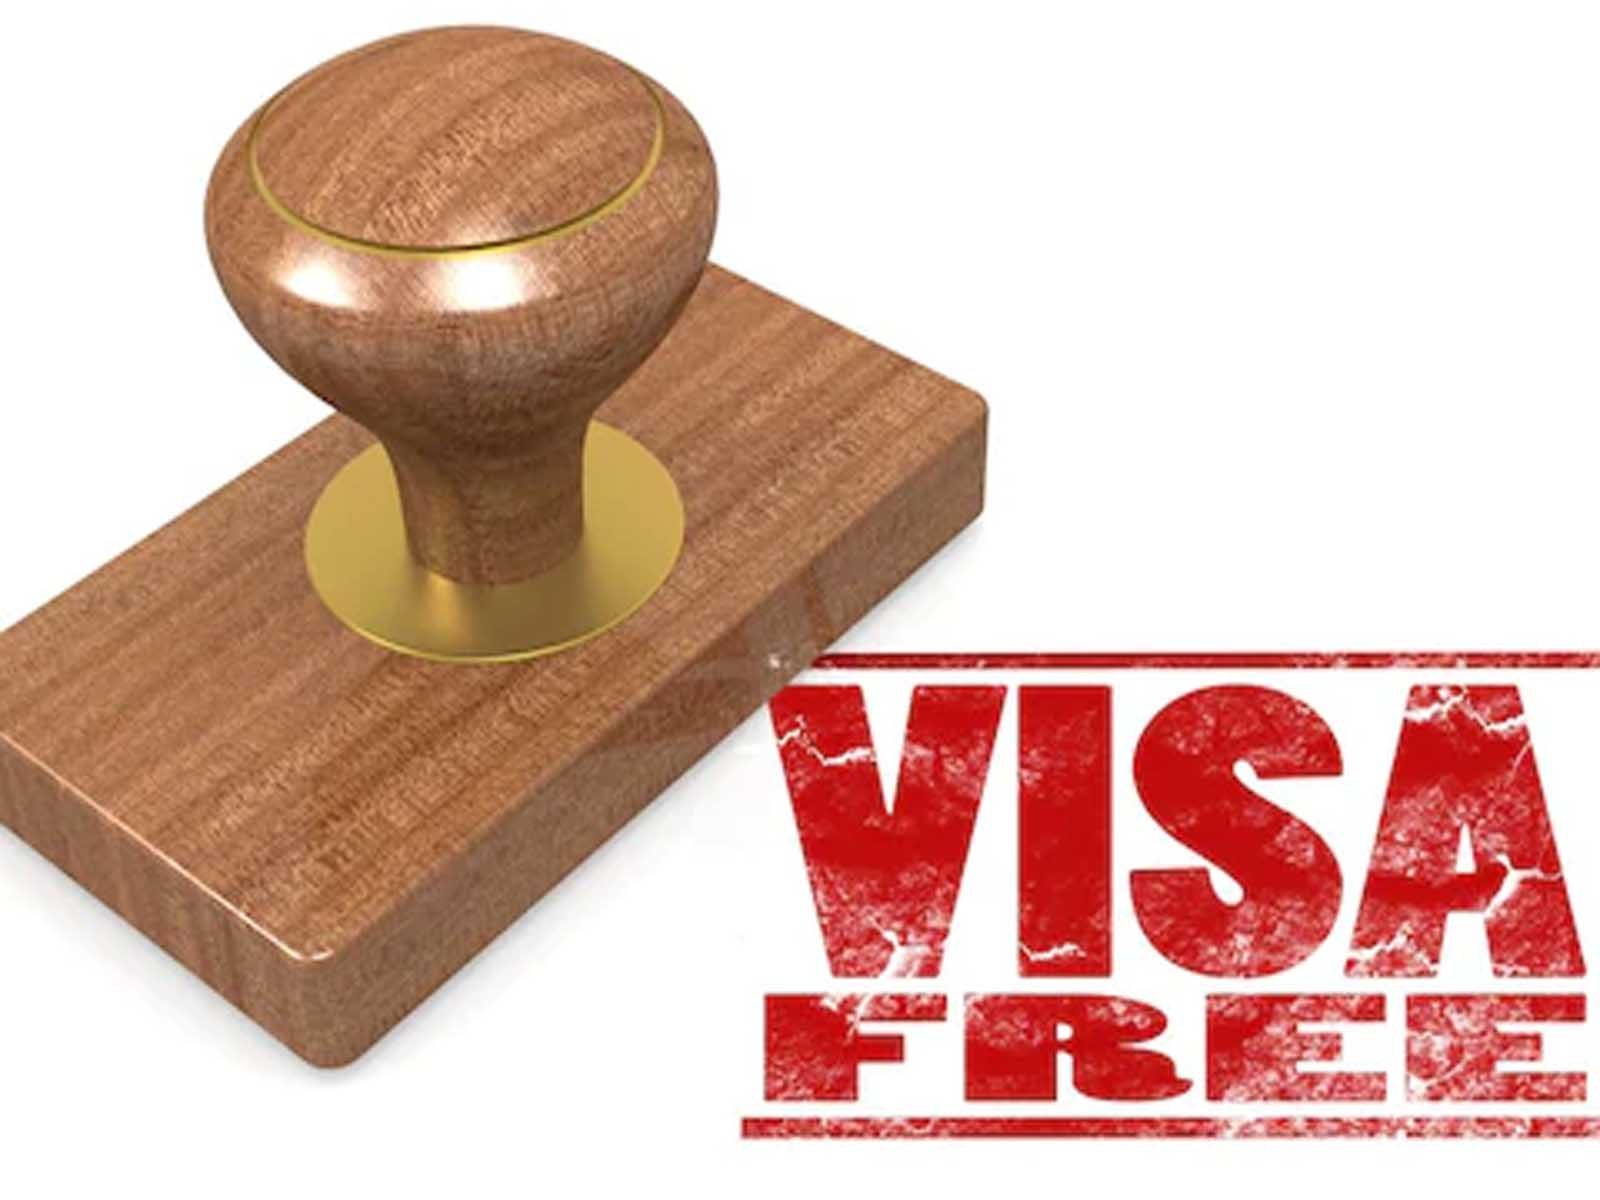 List of Visa Free Countries: ਫੈਸਟੀਵਲ ਸੀਜ਼ਨ 'ਚ ਵੀਜ਼ਾ ਤੋਂ ਬਿਨਾਂ ਕਰੋ ਇਨ੍ਹਾਂ 5 ਦੇਸ਼ਾਂ ਦੀ ਯਾਤਰਾ, ਜਾਣੋ ਕਿਵੇਂ 